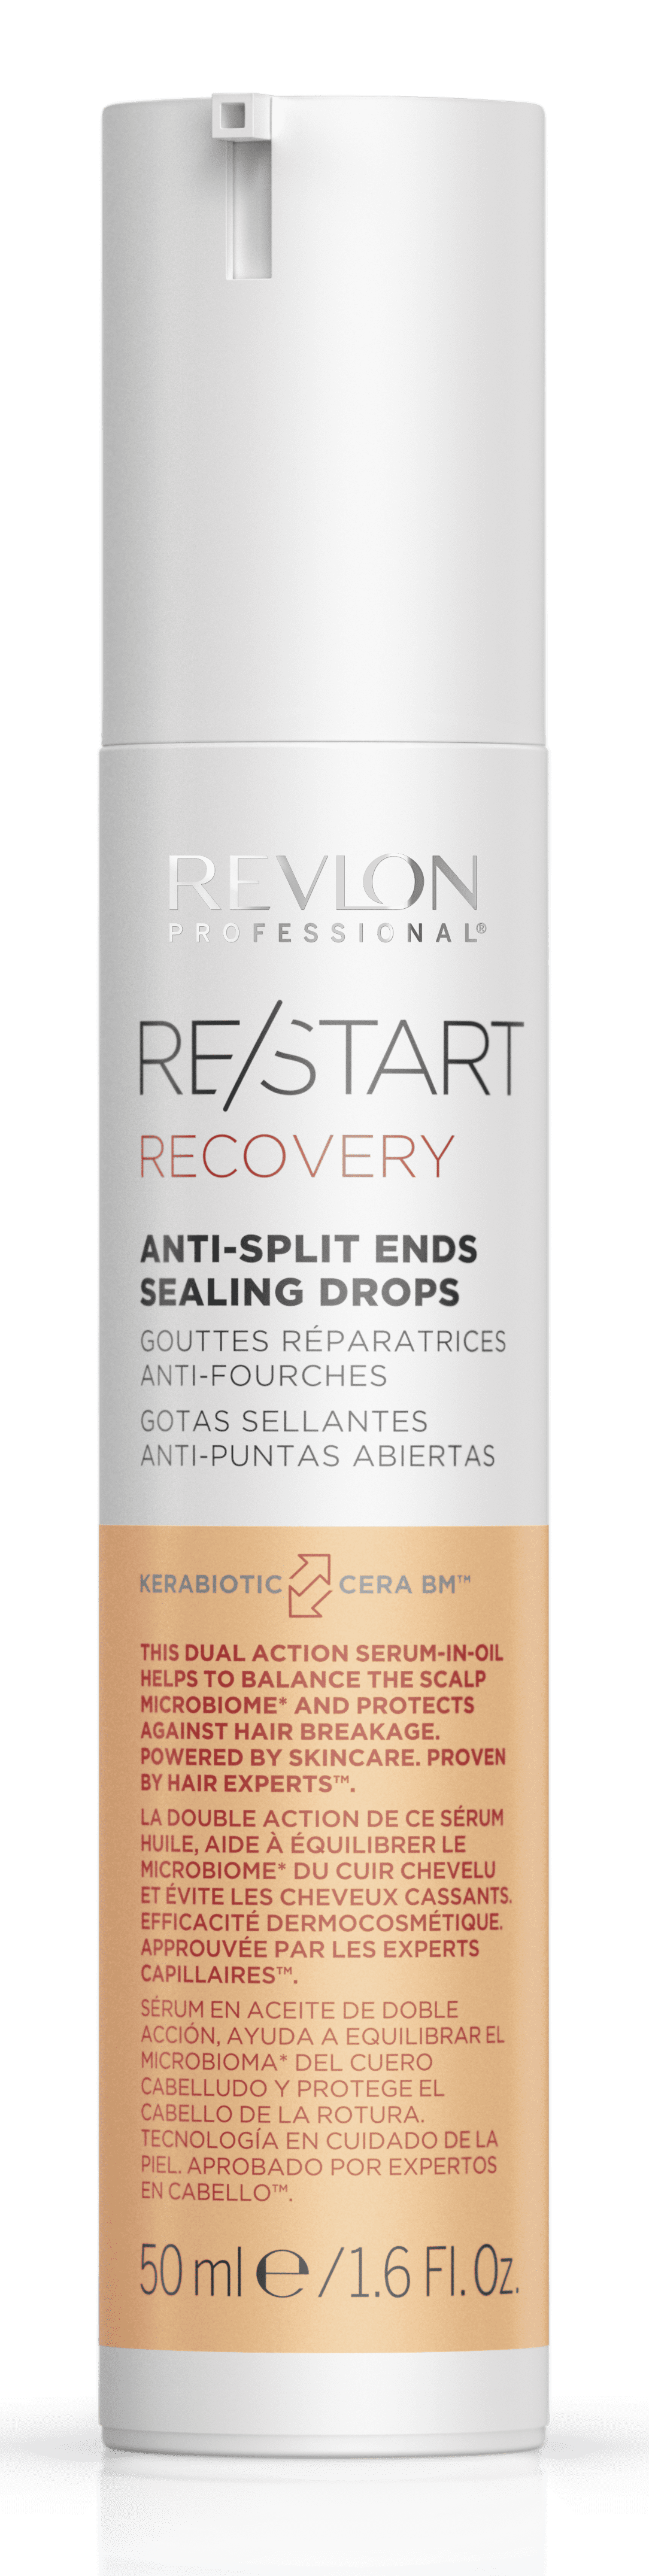 Revlon Restart - Gotas Sellantes RECOVERY anti-puntas abiertas 50 ml